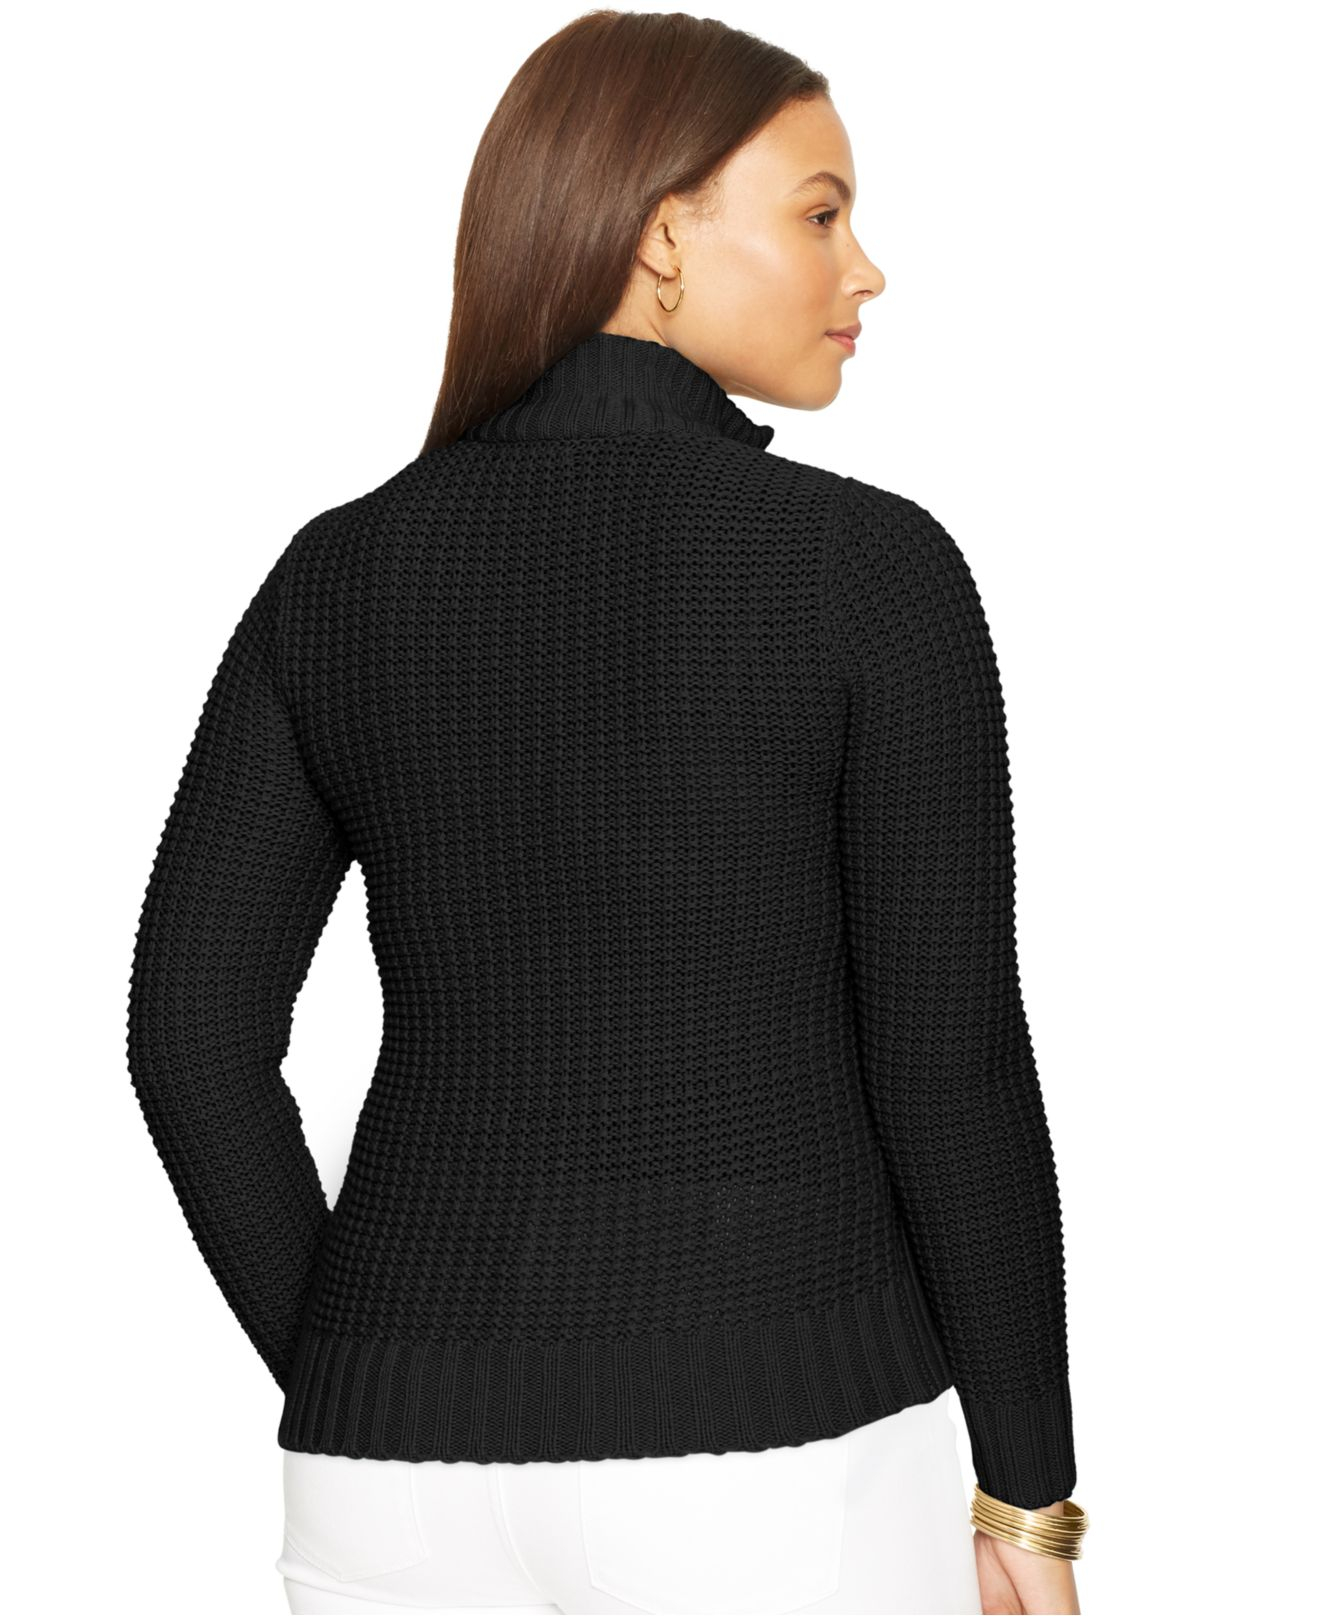 Ralph lauren zippered cardigans for women plus size – Women’s Sweaters ...